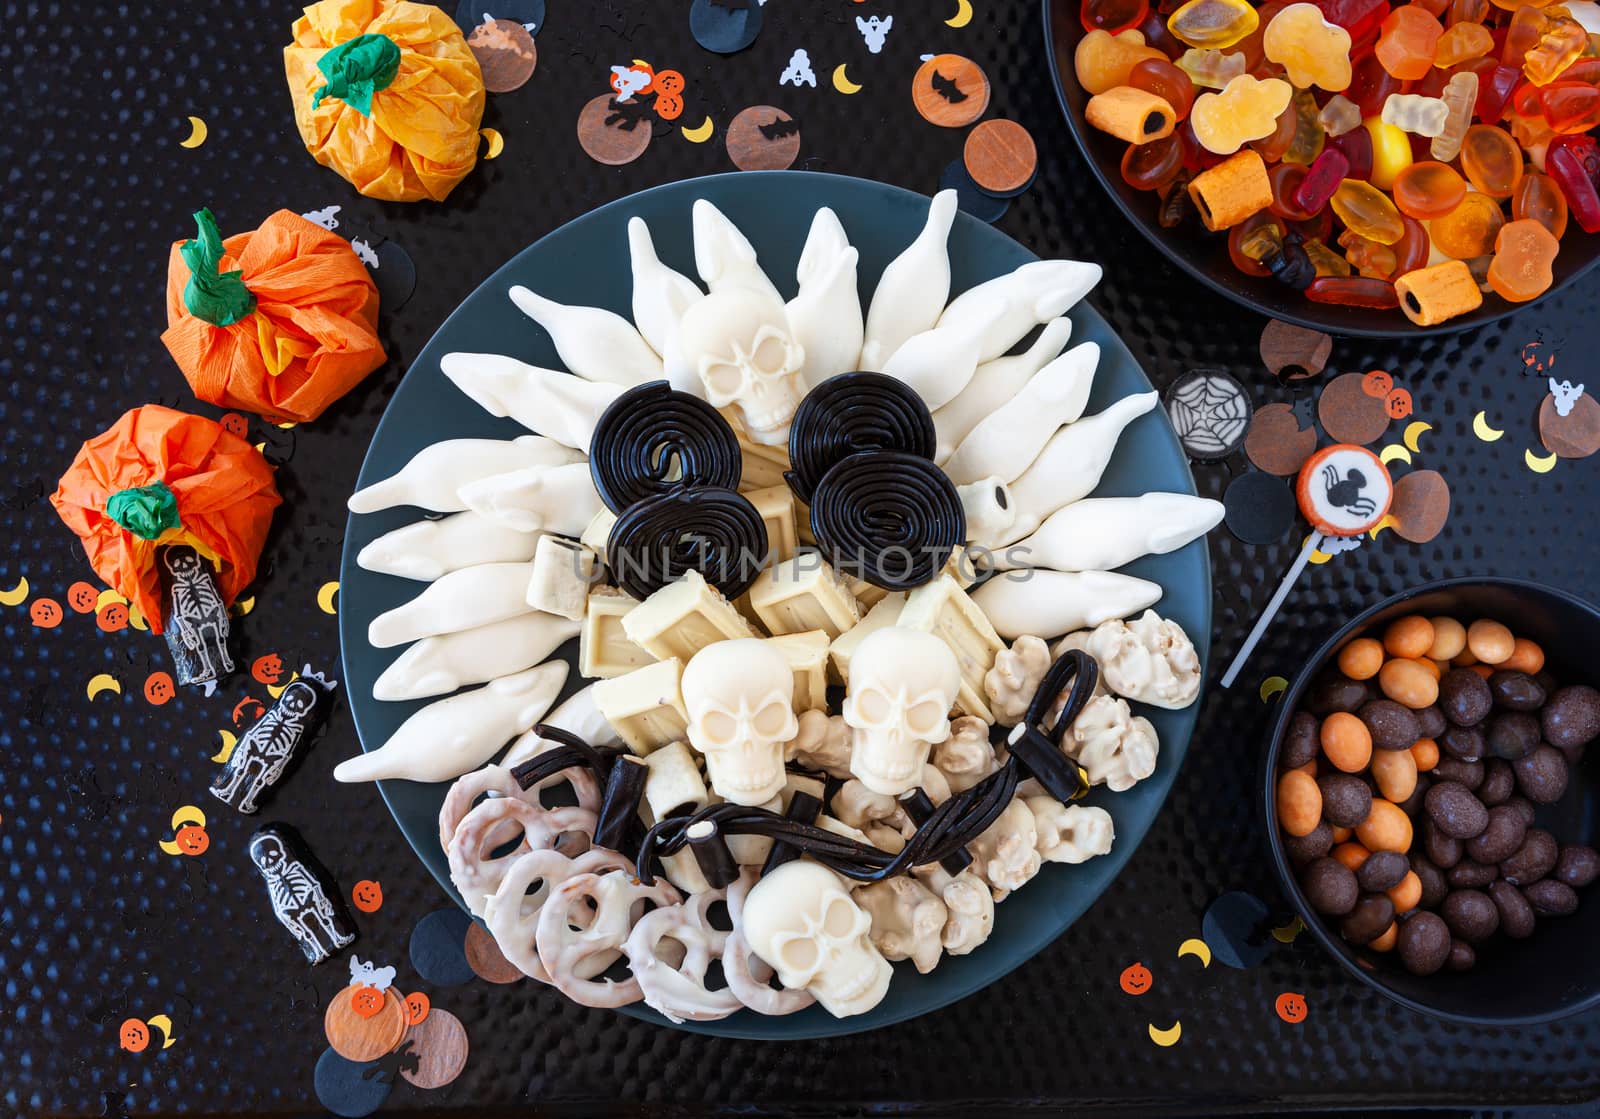 Halloween sweets in skull shape by BarbaraNeveu